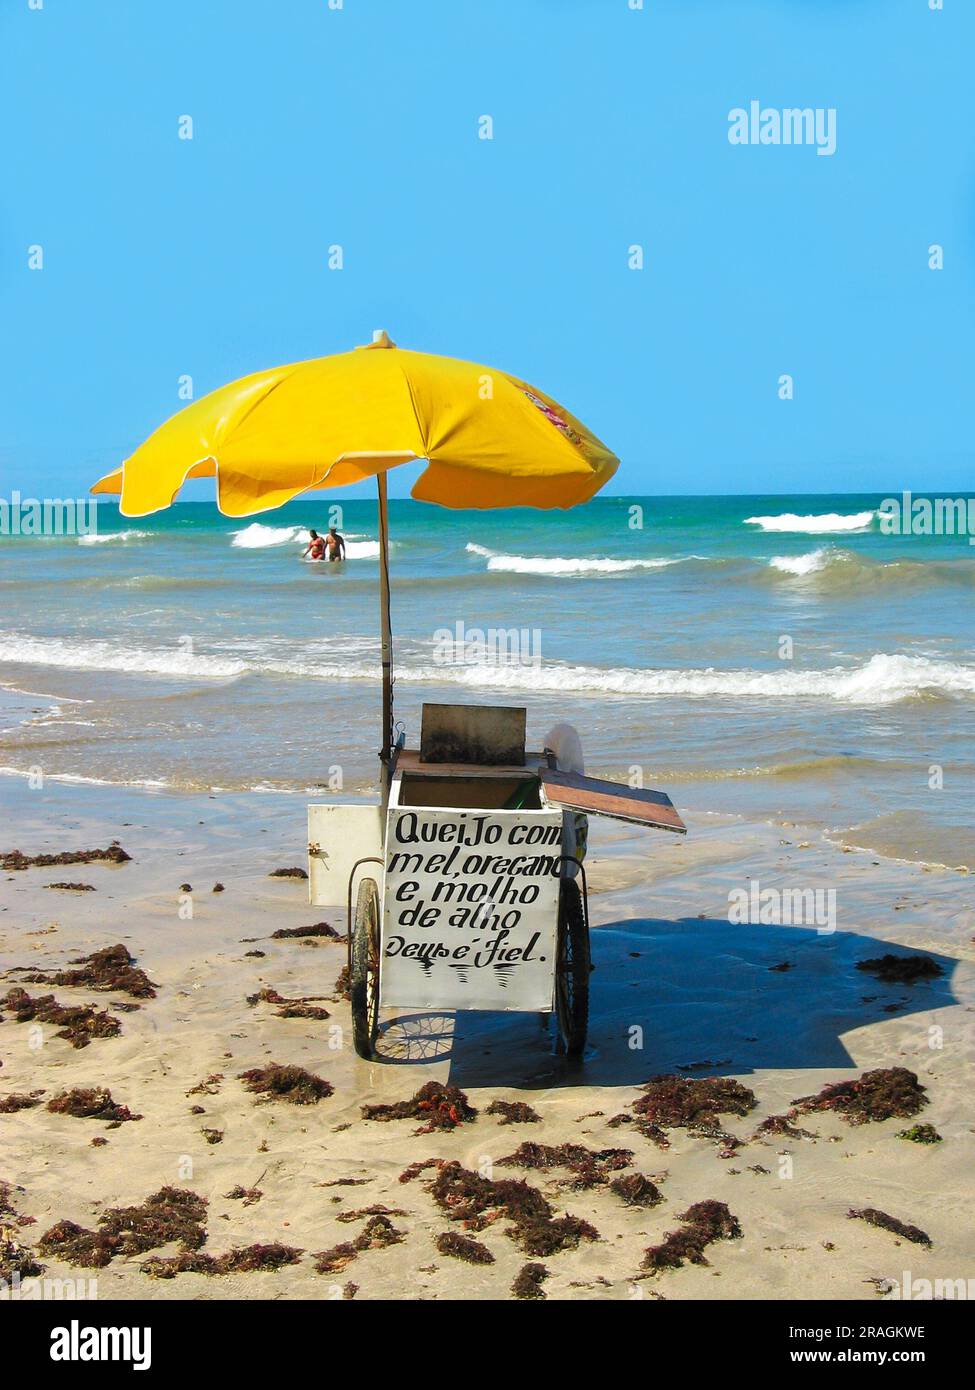 Beach in Brazil, yellow parasol beach troley. / Text in Portuguese 'Queijo com mel, oregano e molho de alho Deus e fiel'  (English: Cheese with honey, Stock Photo